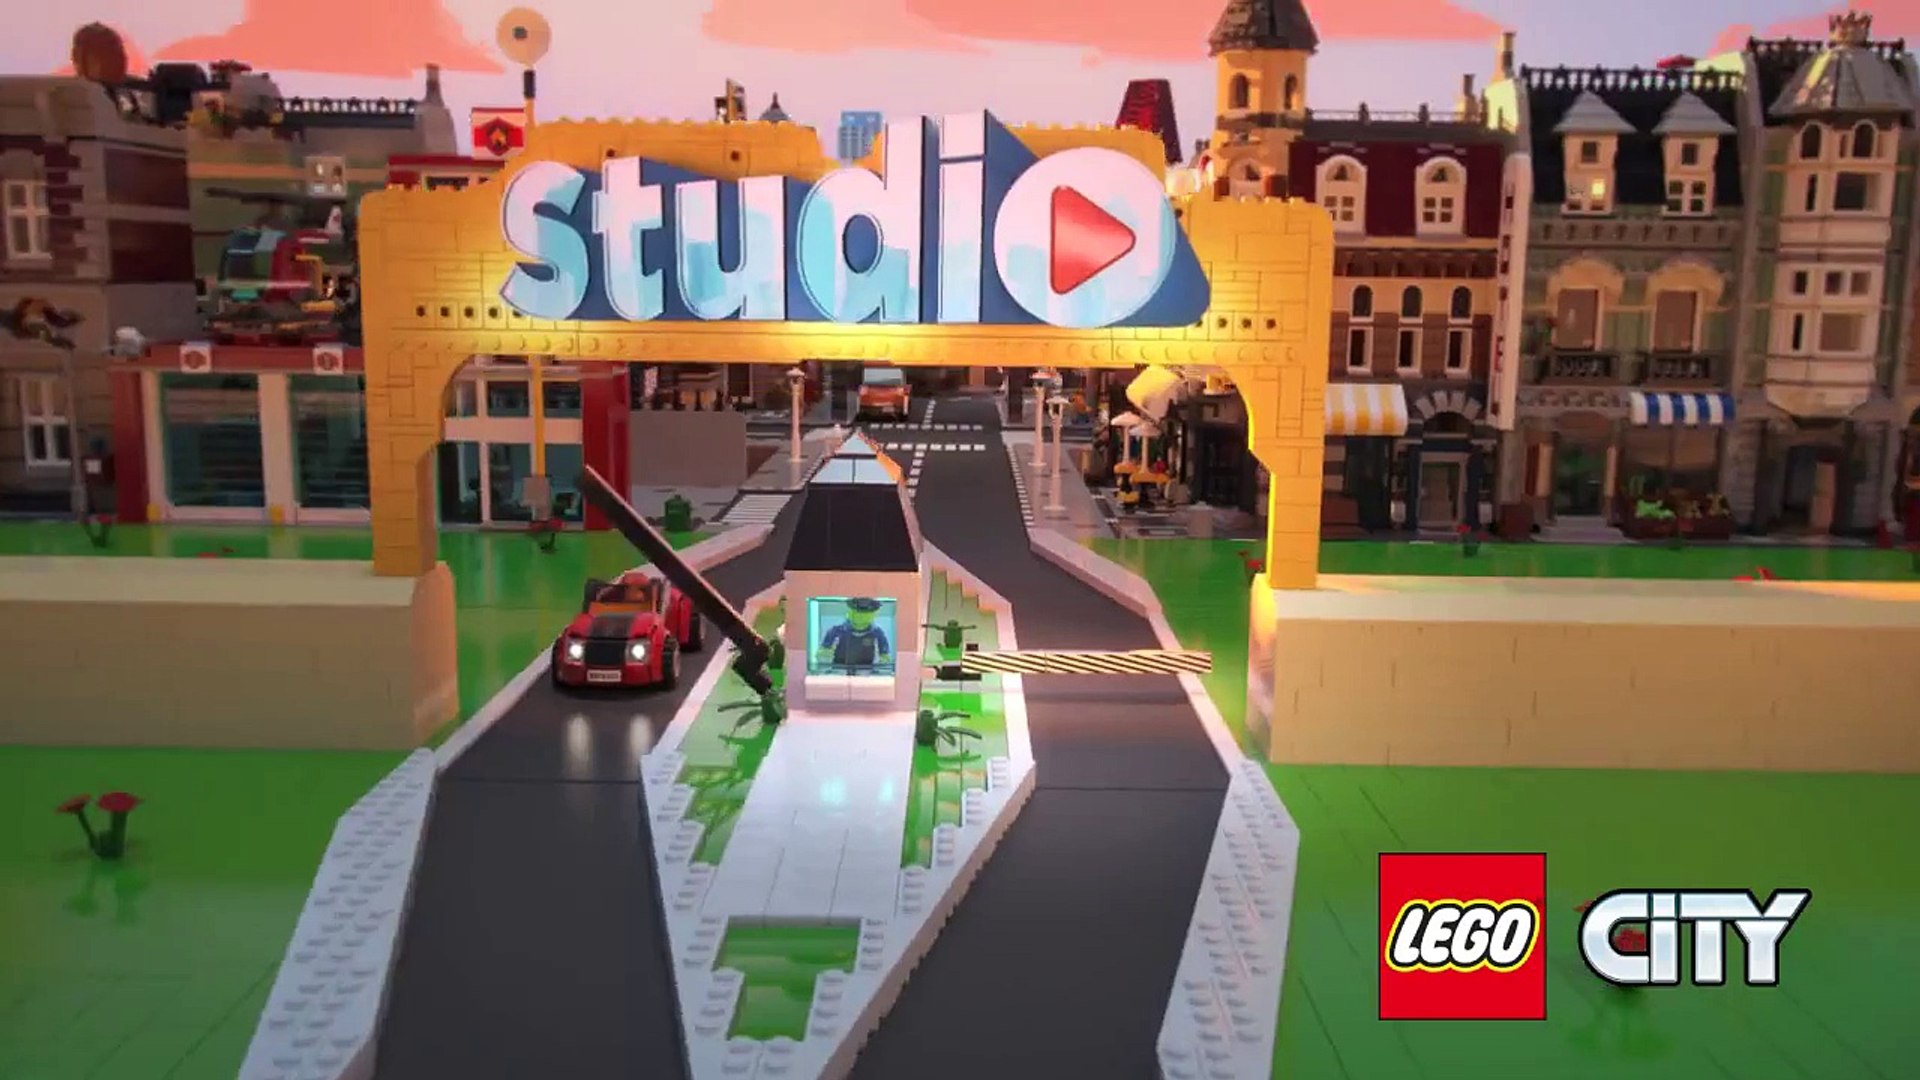 LEGO CITY Studio Behind the Scenes Tour - Vidéo Dailymotion